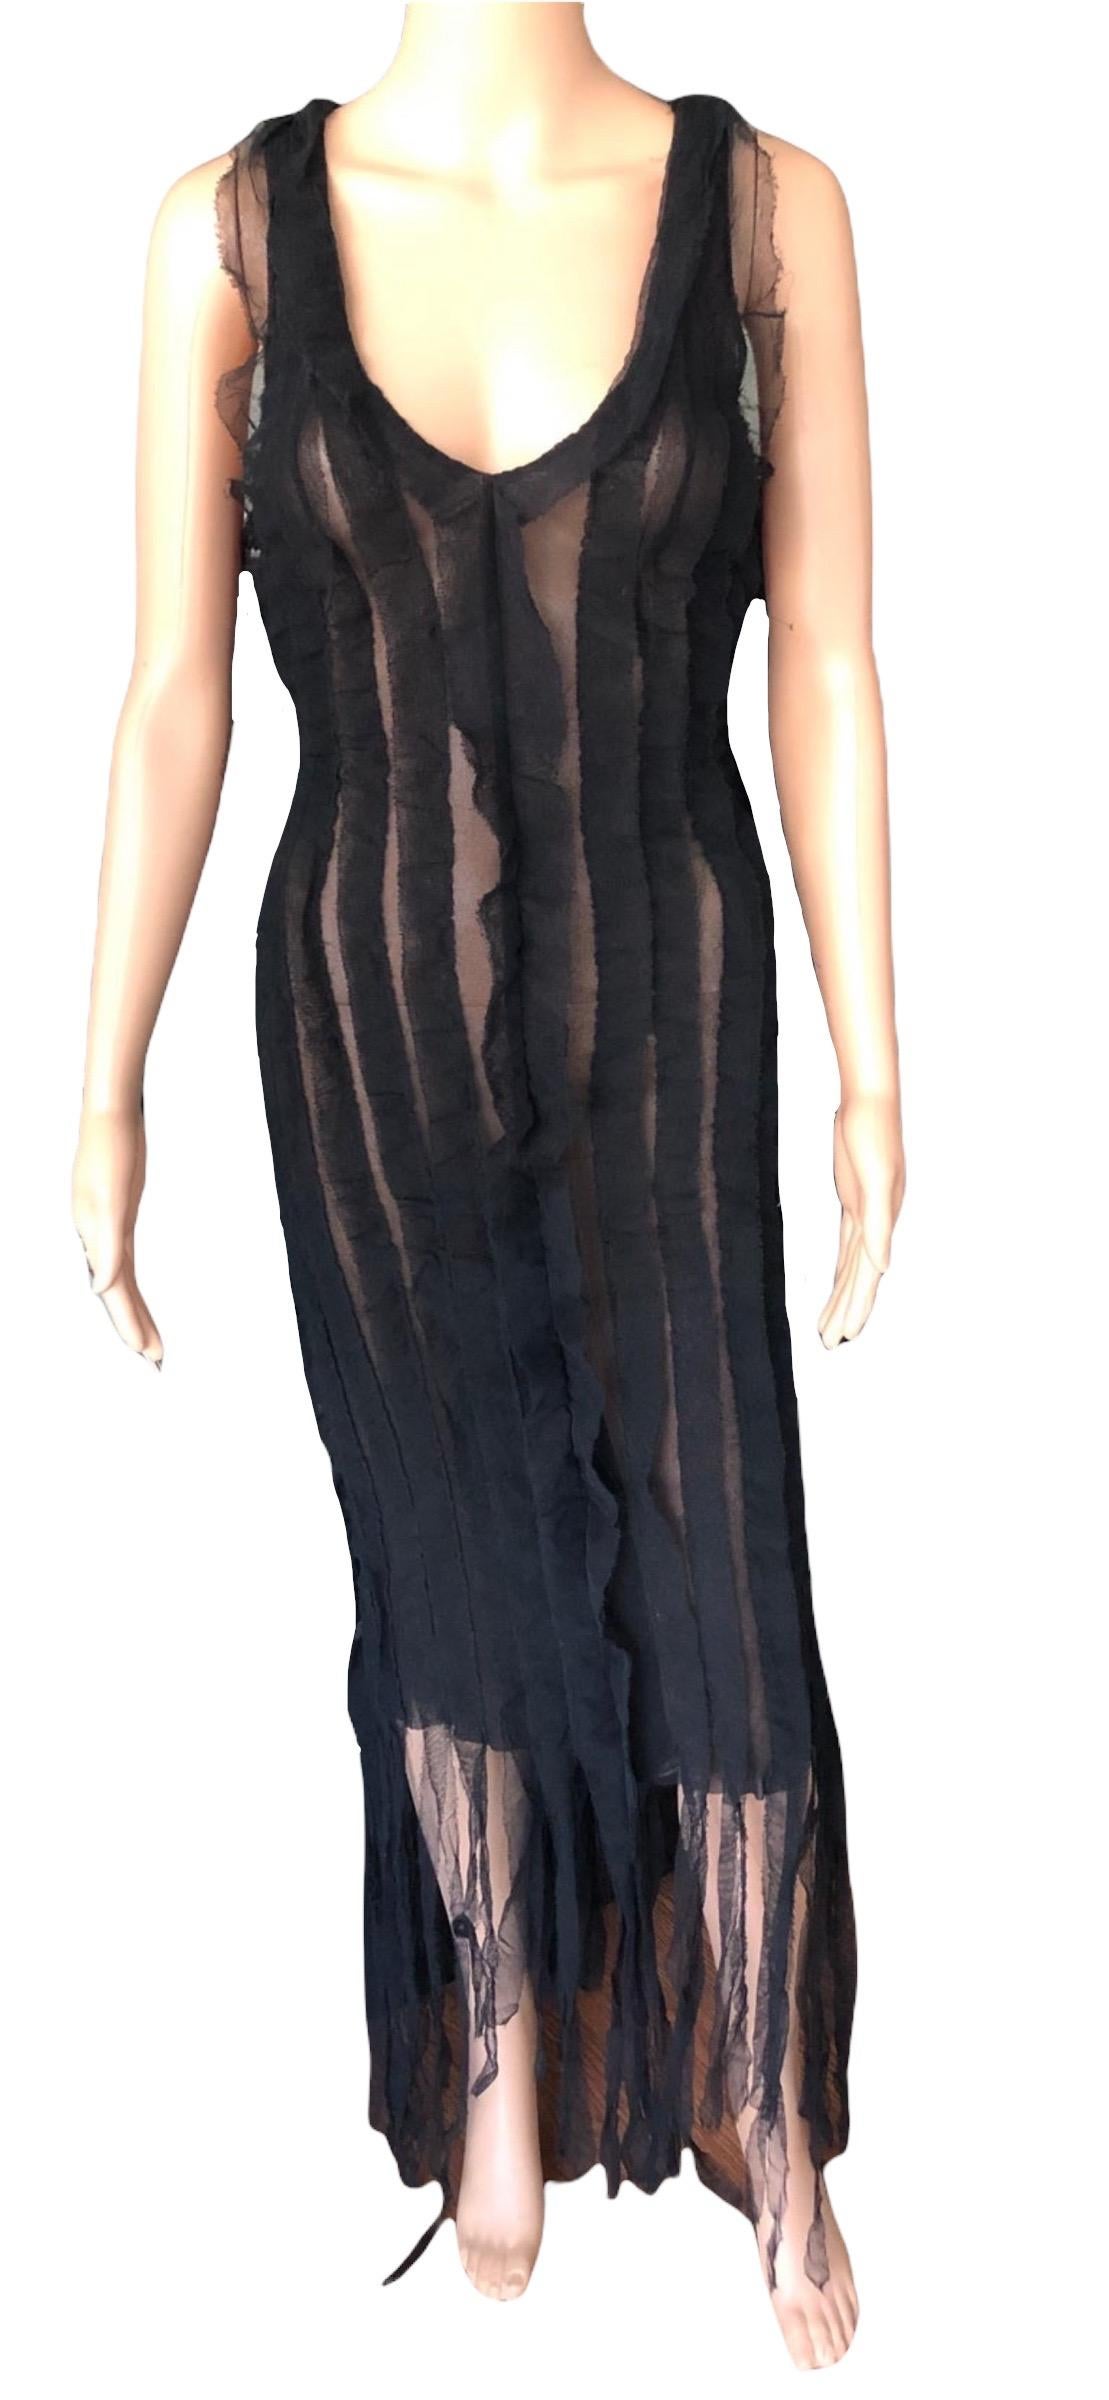 Jean Paul Gaultier c.1990 Vintage Semi-Sheer Fringe Mesh Black Dress 5